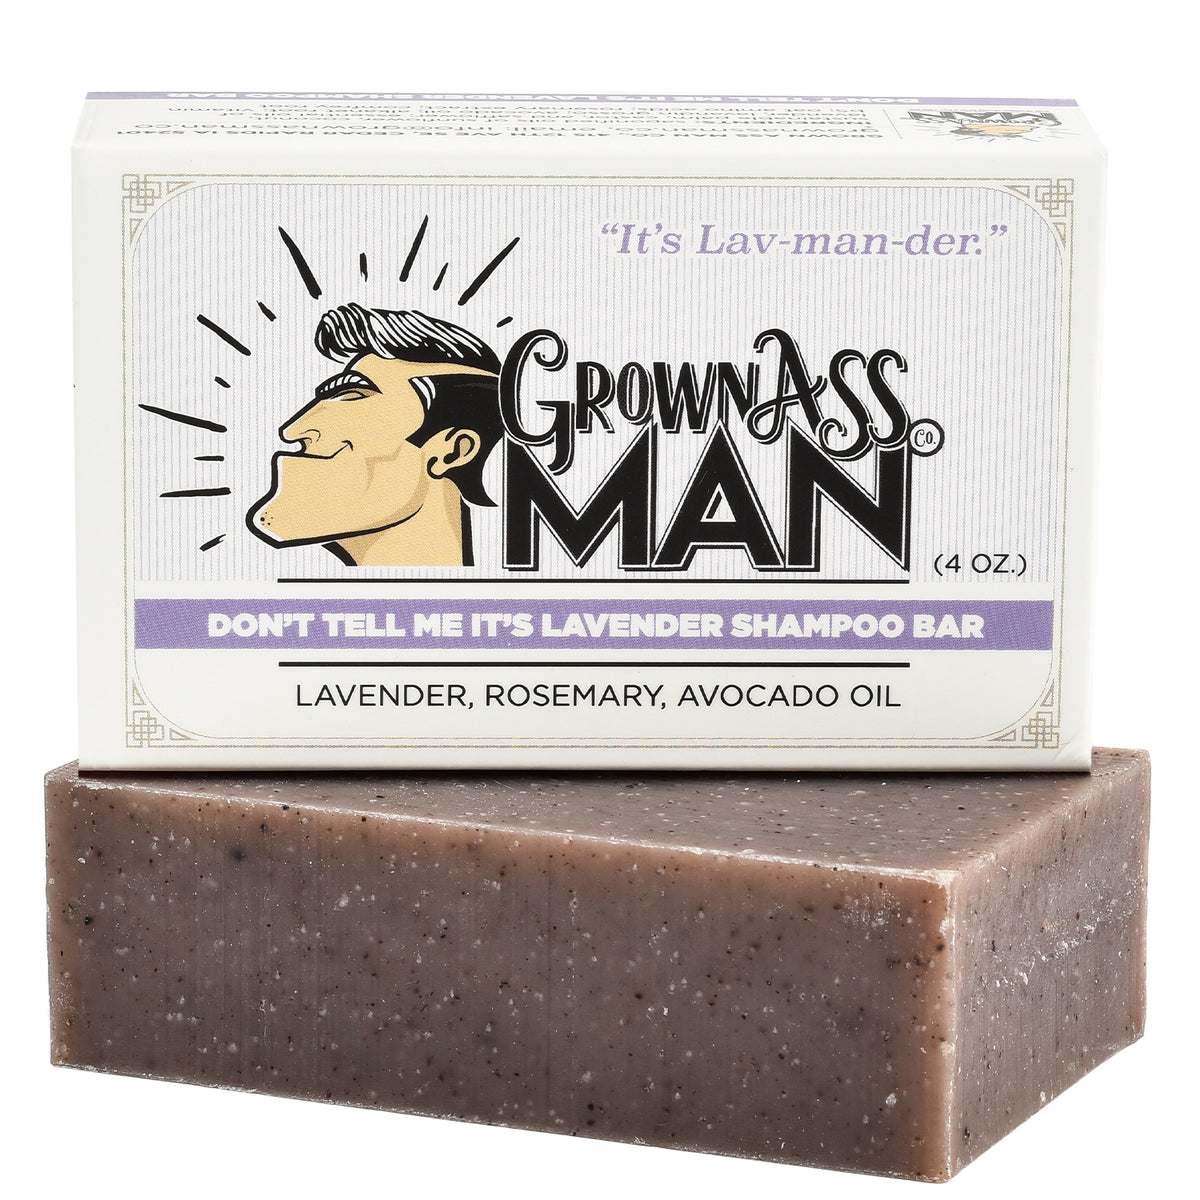 The Gentleman Shampoo Bar Variety 3-Pack